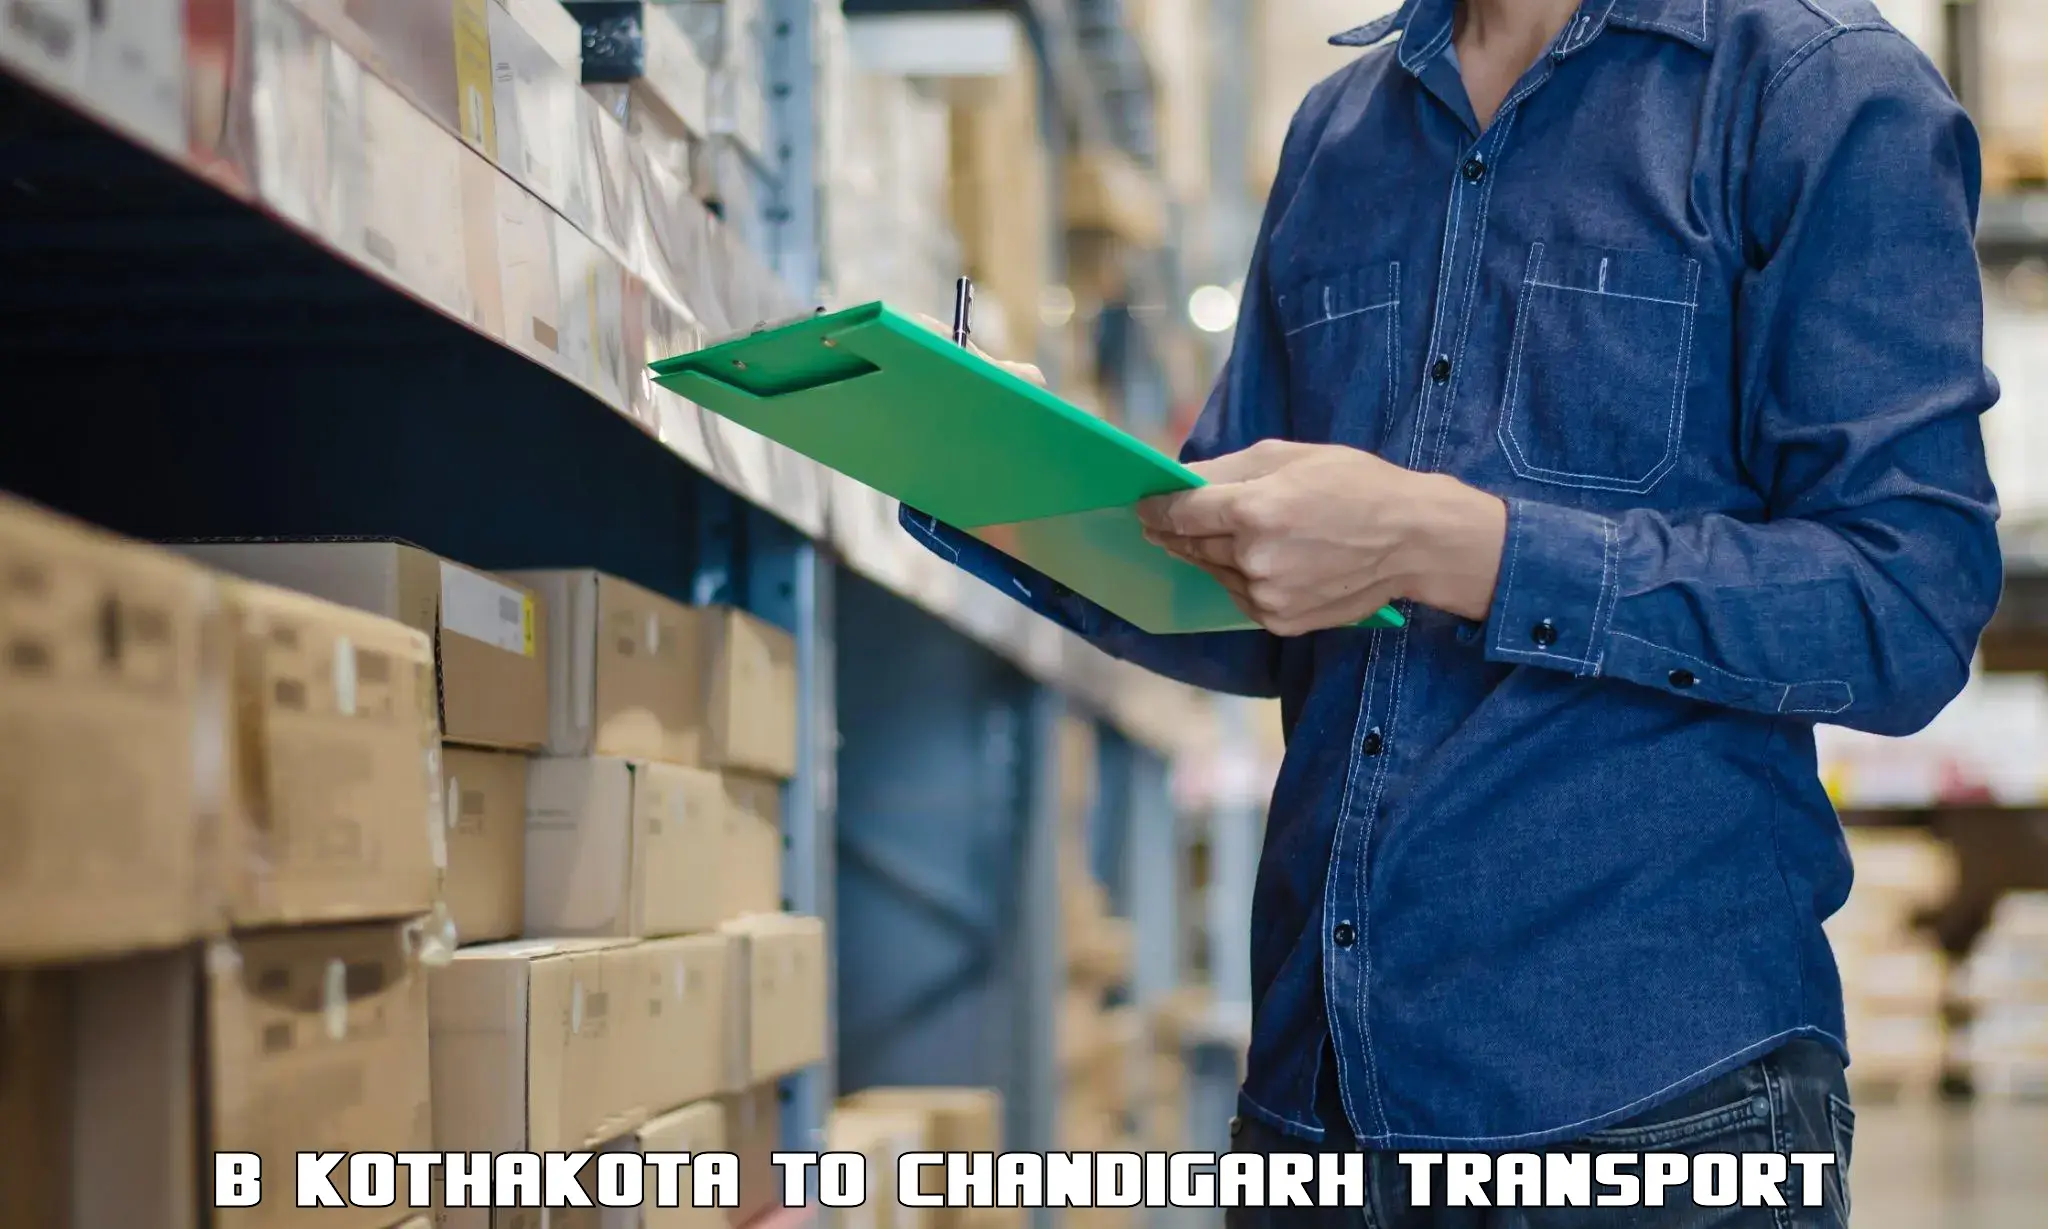 Air freight transport services B Kothakota to Chandigarh